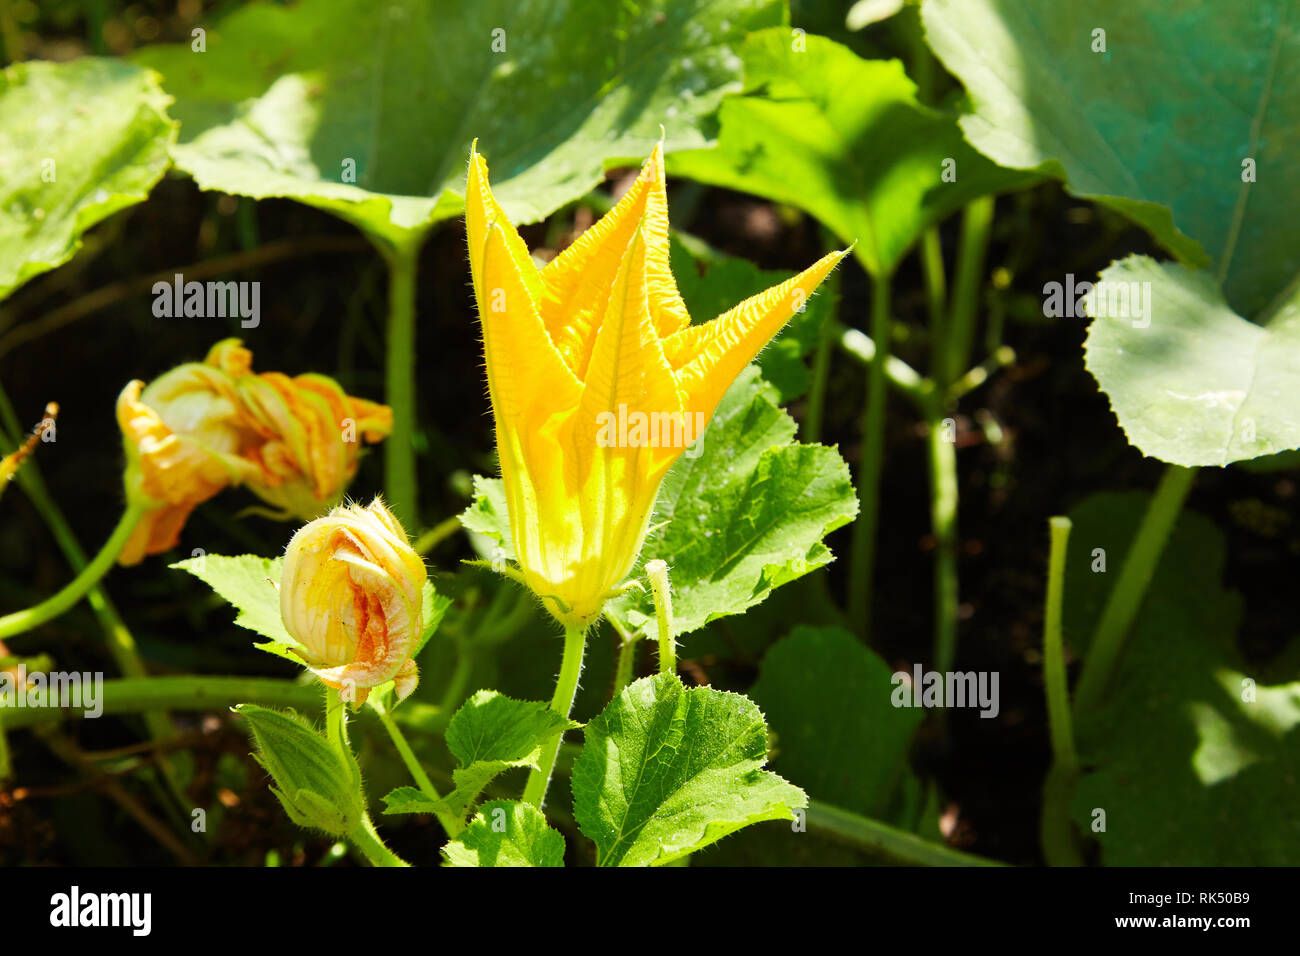 Big yellow pumpkin flower blooming macro close up. Scientific name Cucurbita. Stock Photo